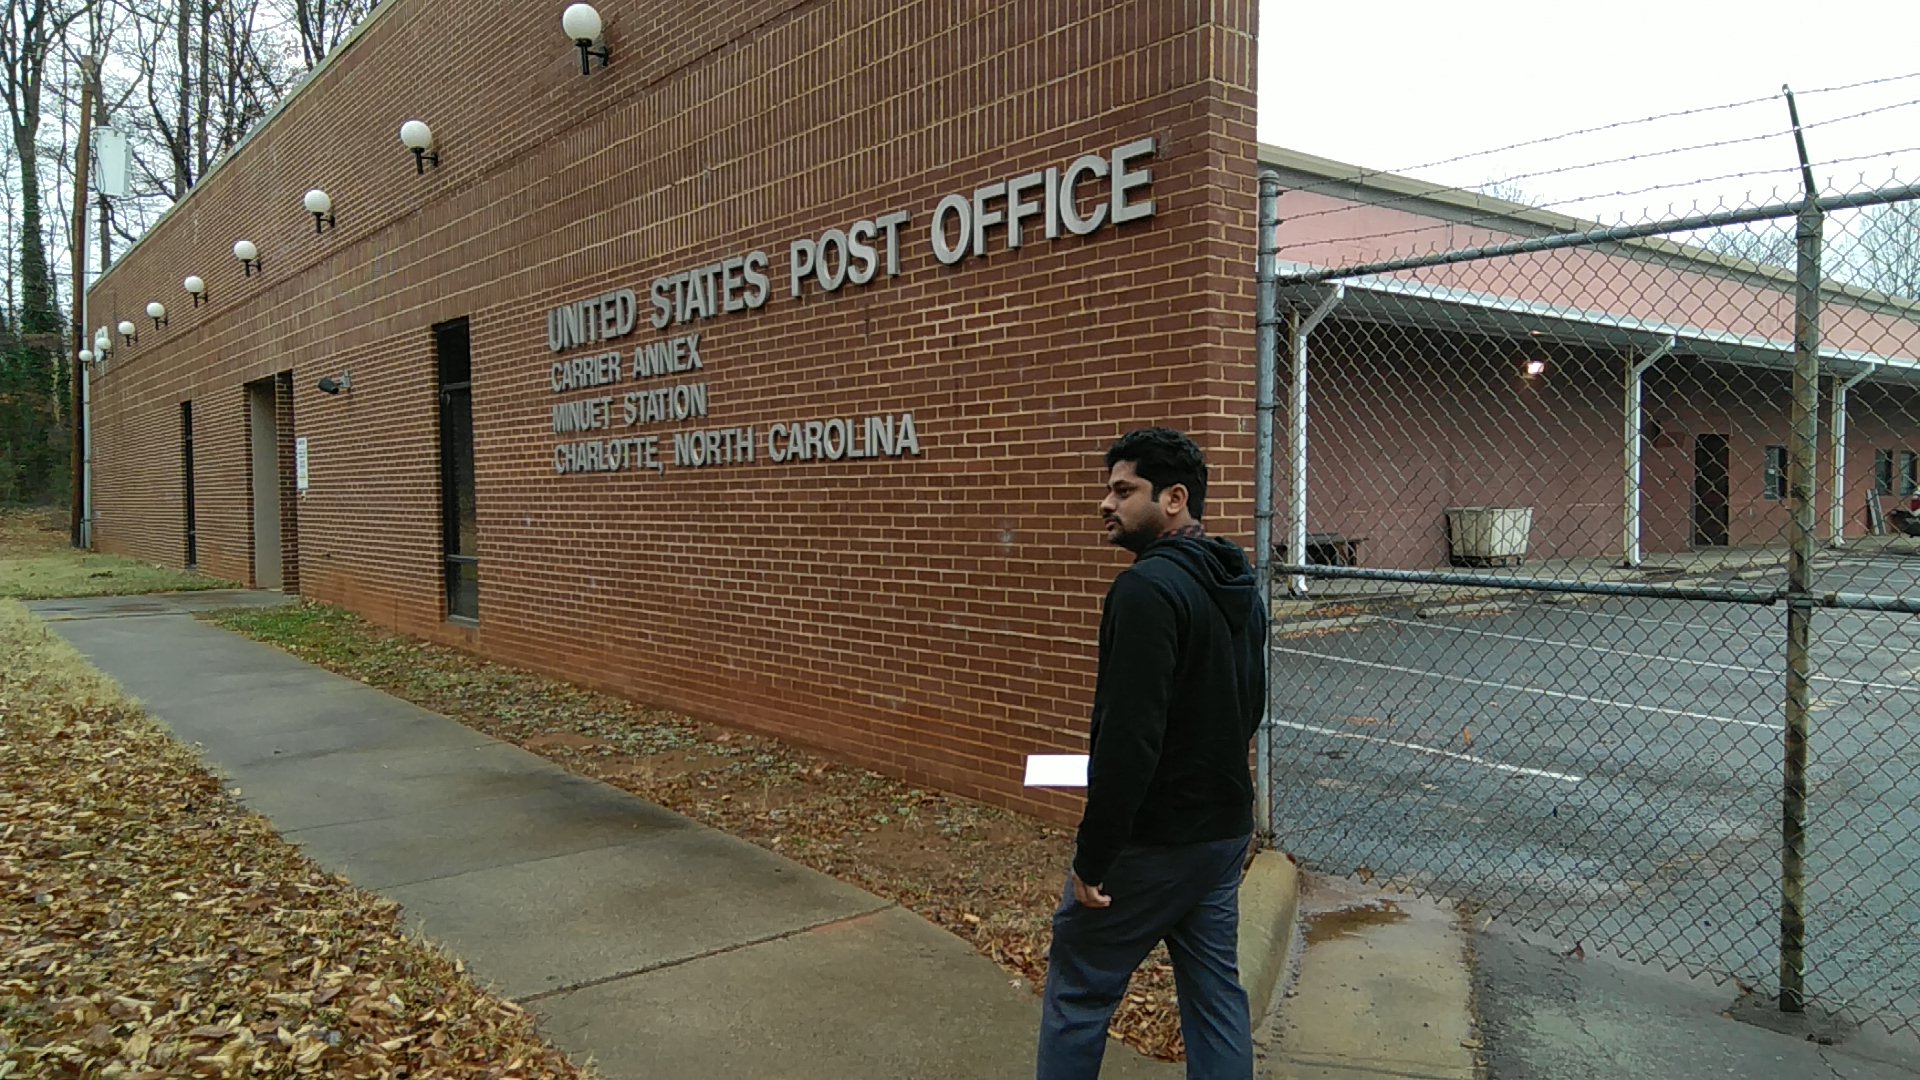 US Post Office - Carrier Annex